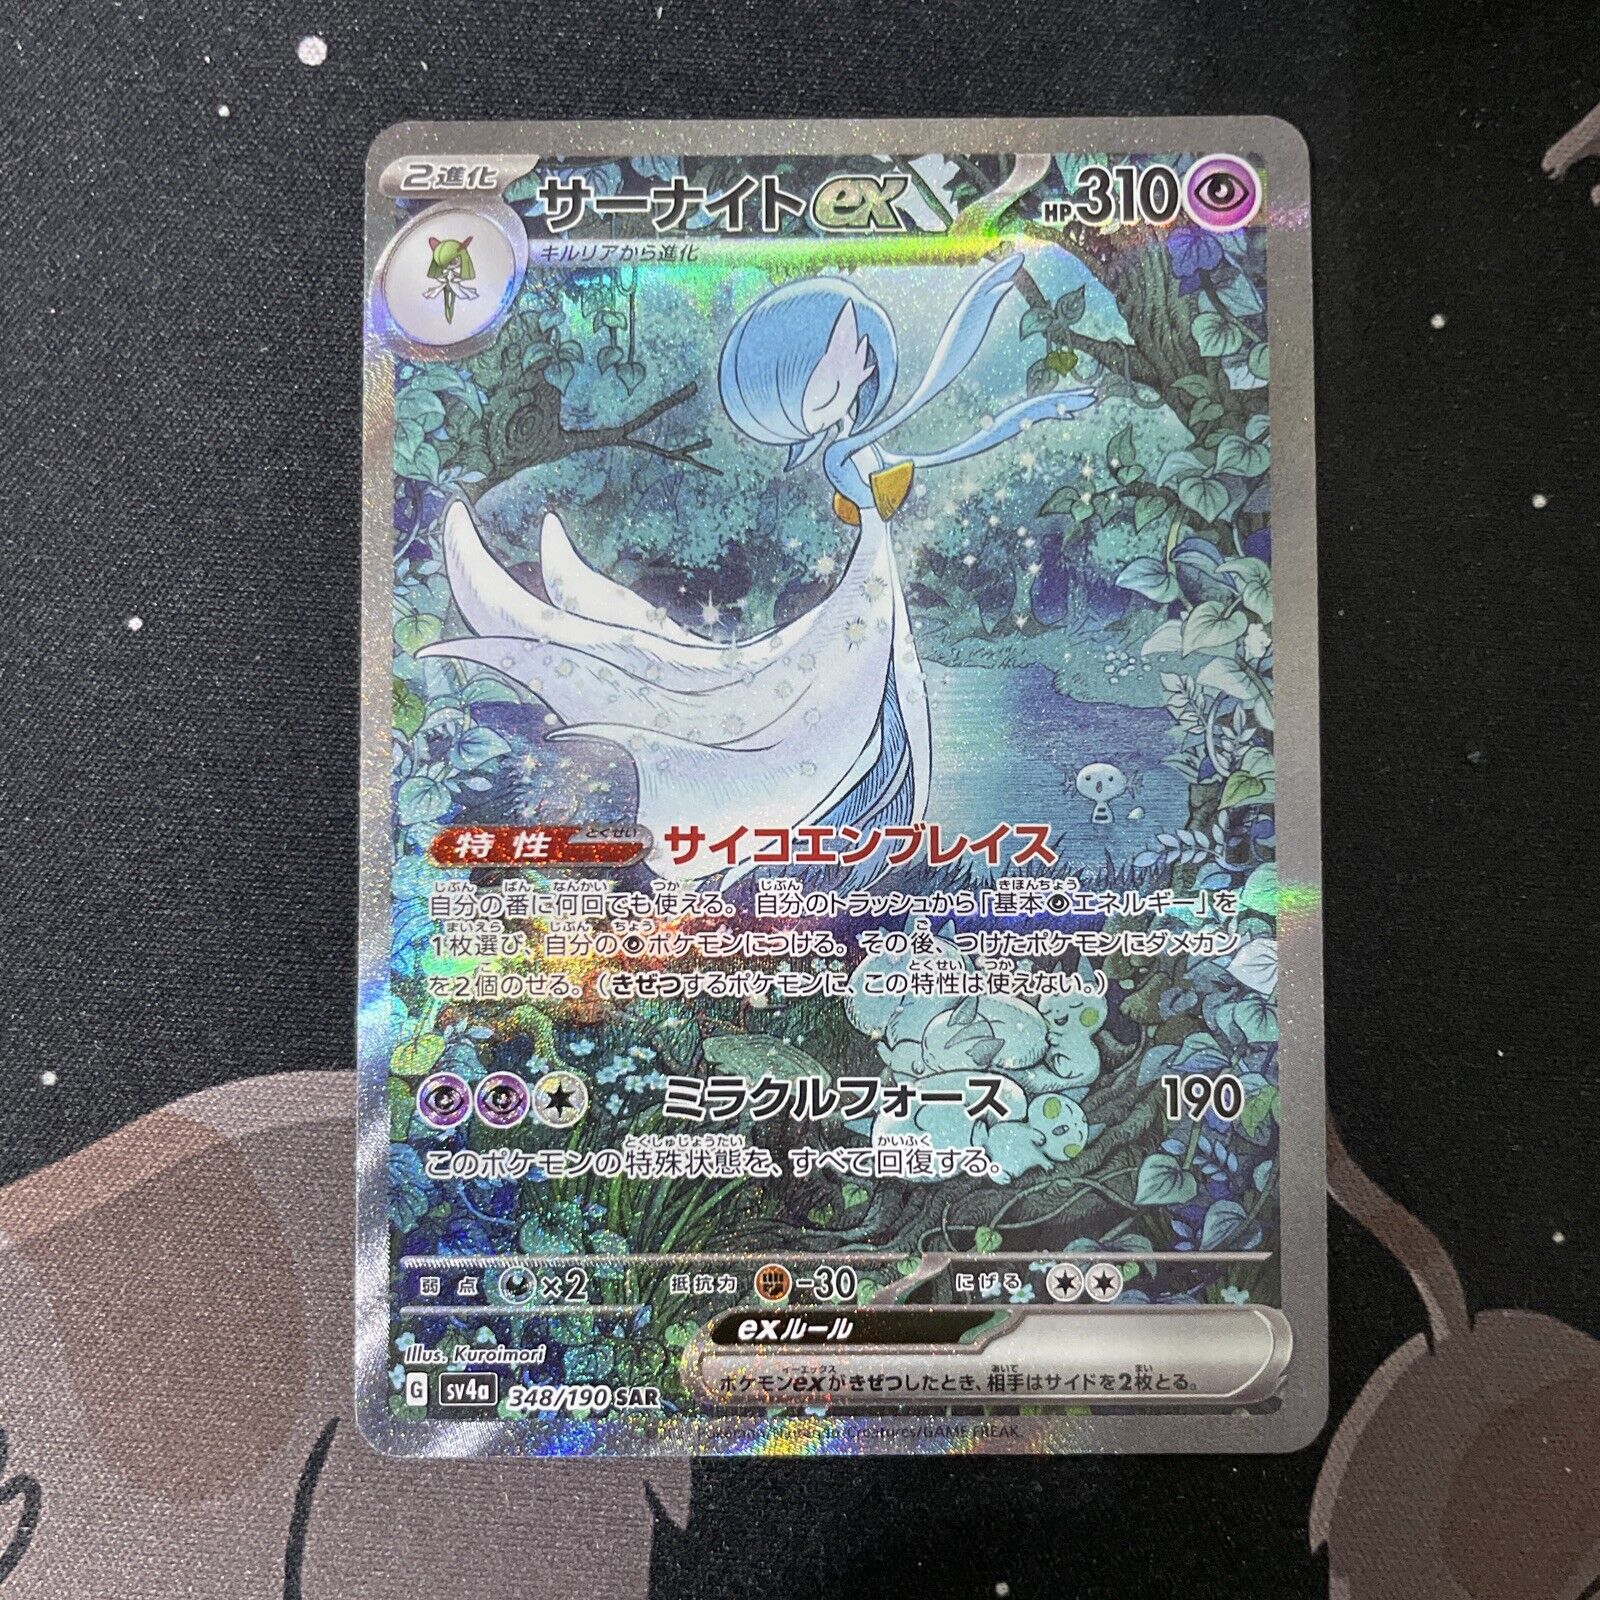 Gardevoir ex SAR 348/190 - SV4a Shiny Treasure ex - Japanese Pokemon Card